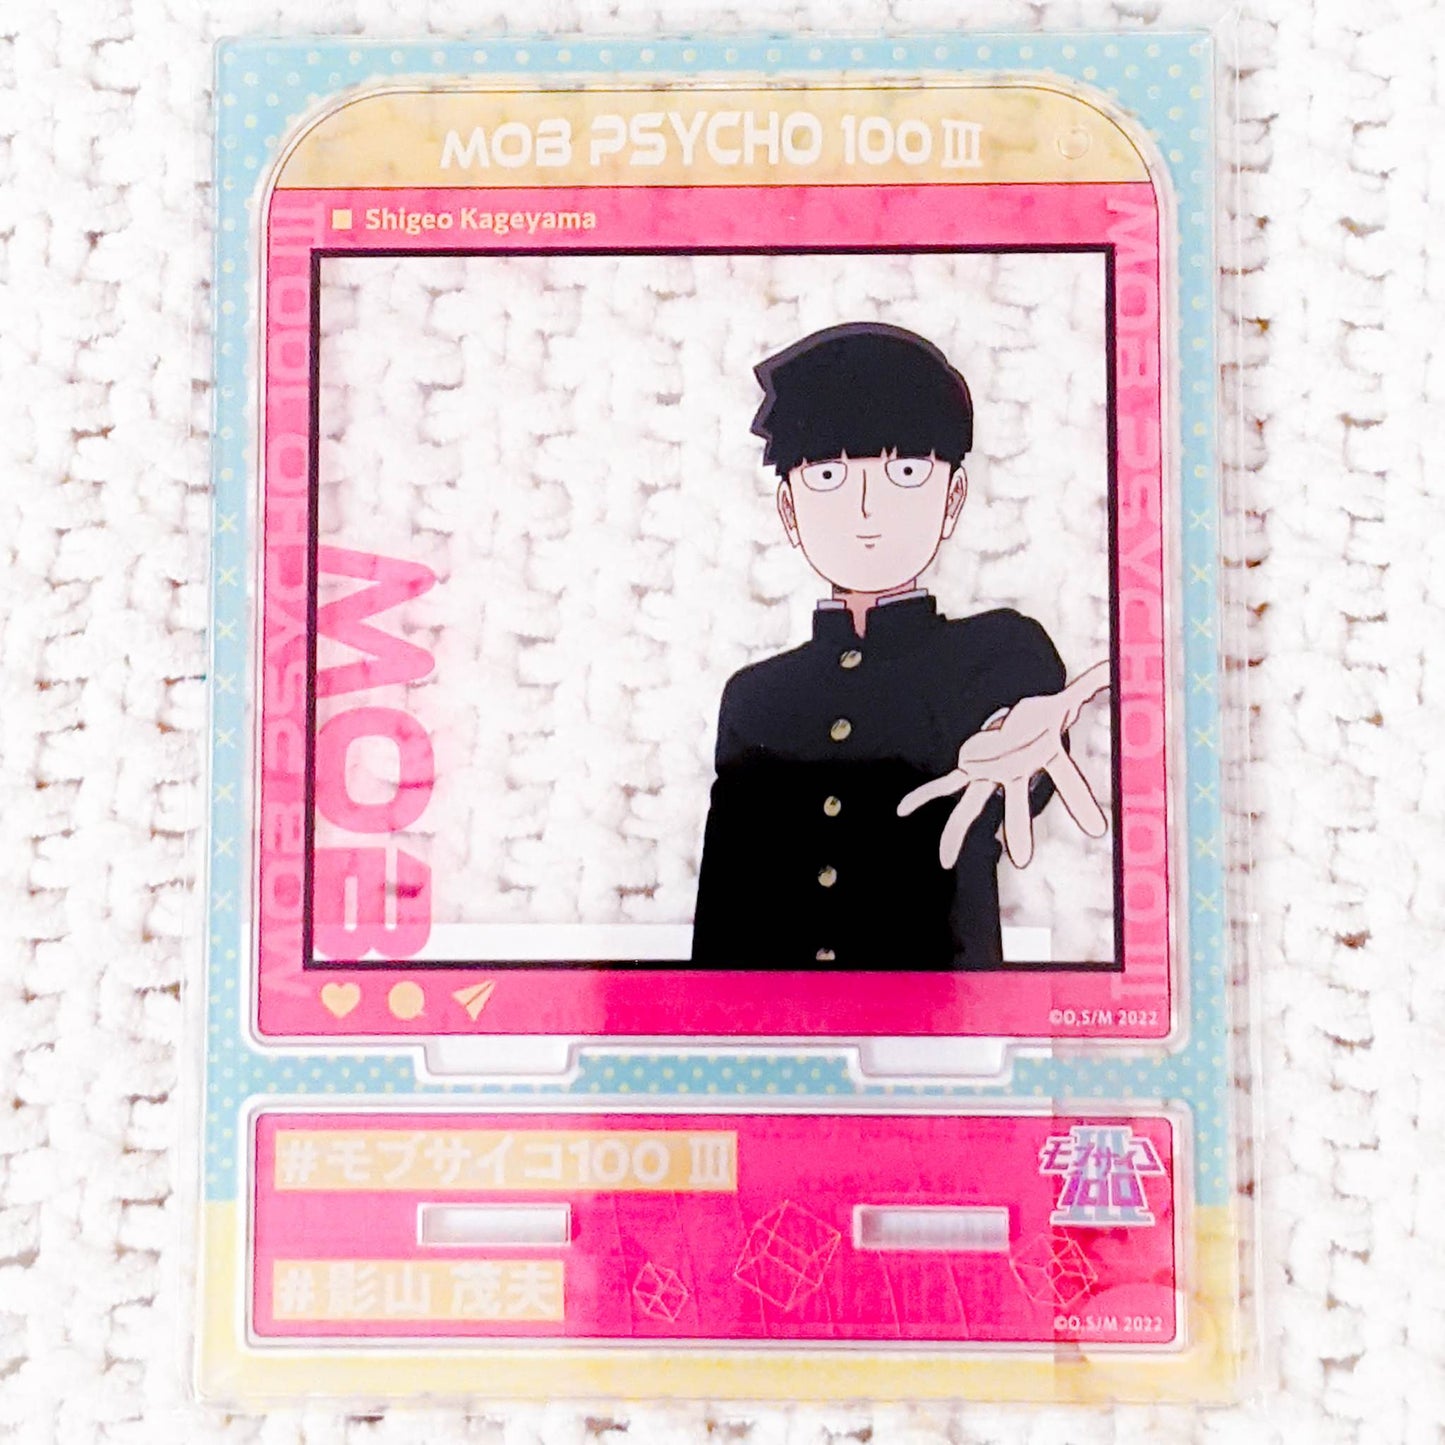 Shigeo Kageyama - Mob Psycho 100 Anime Acrylic Photo Stand